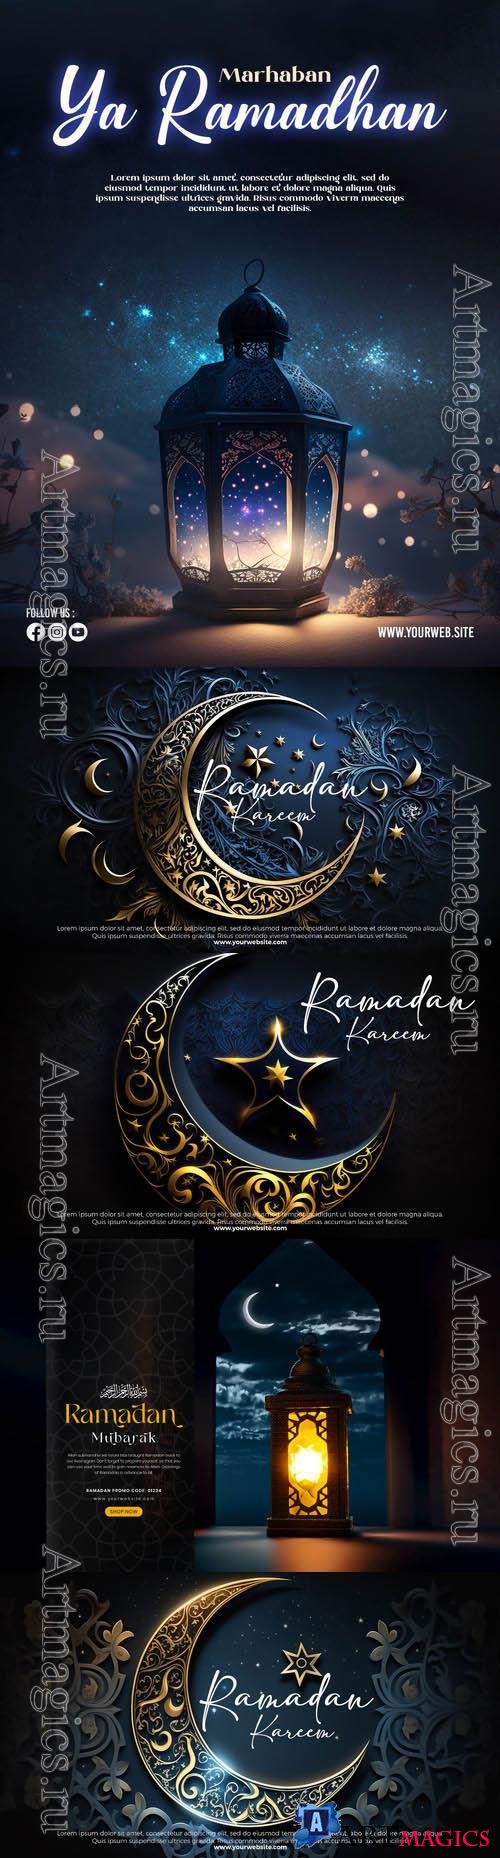 PSD ramadan kareem banner template with 3d render islamic background